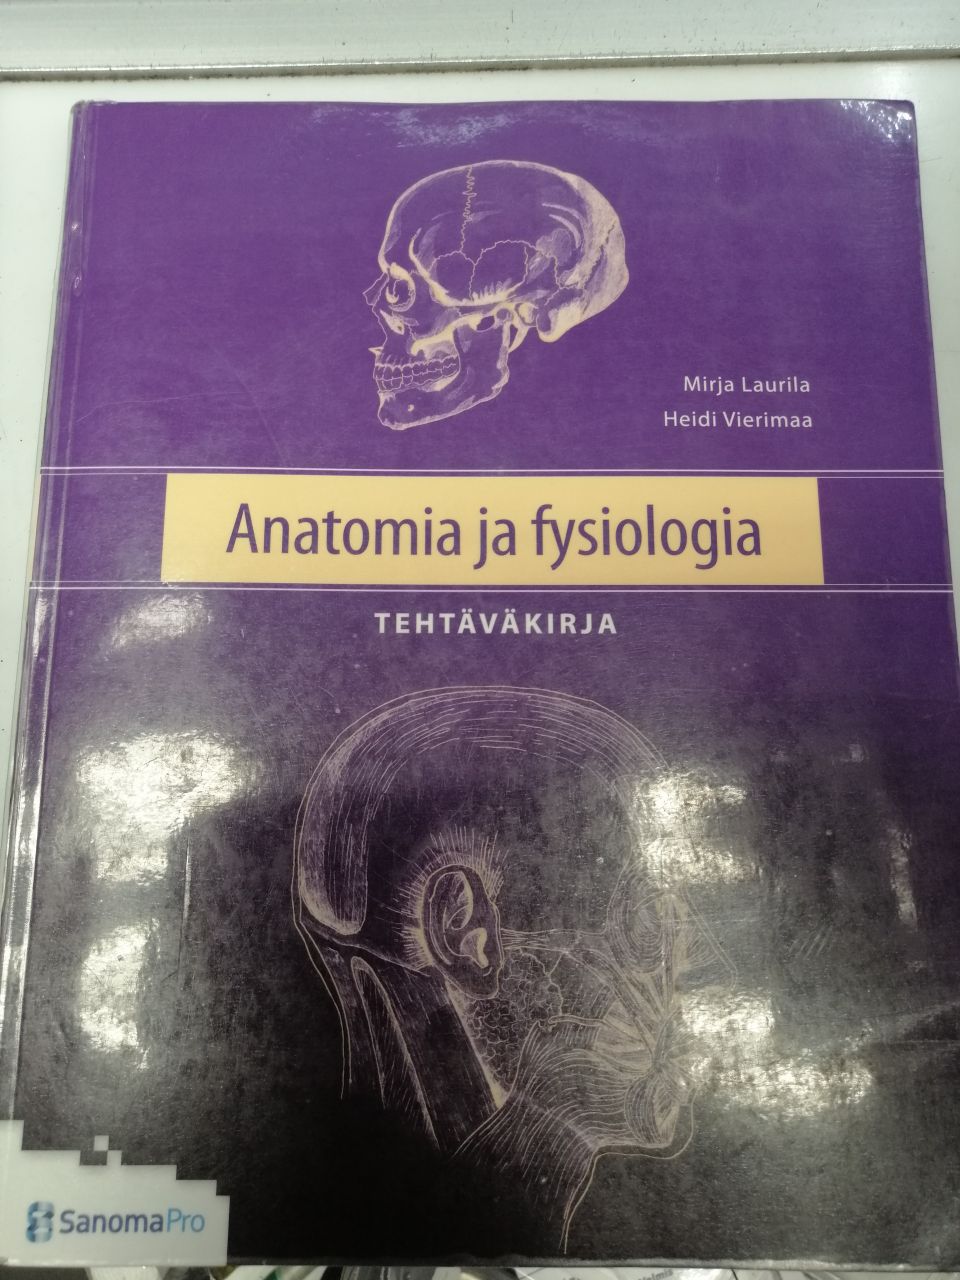 Anatomia ja fysiologia tehtäväkirja